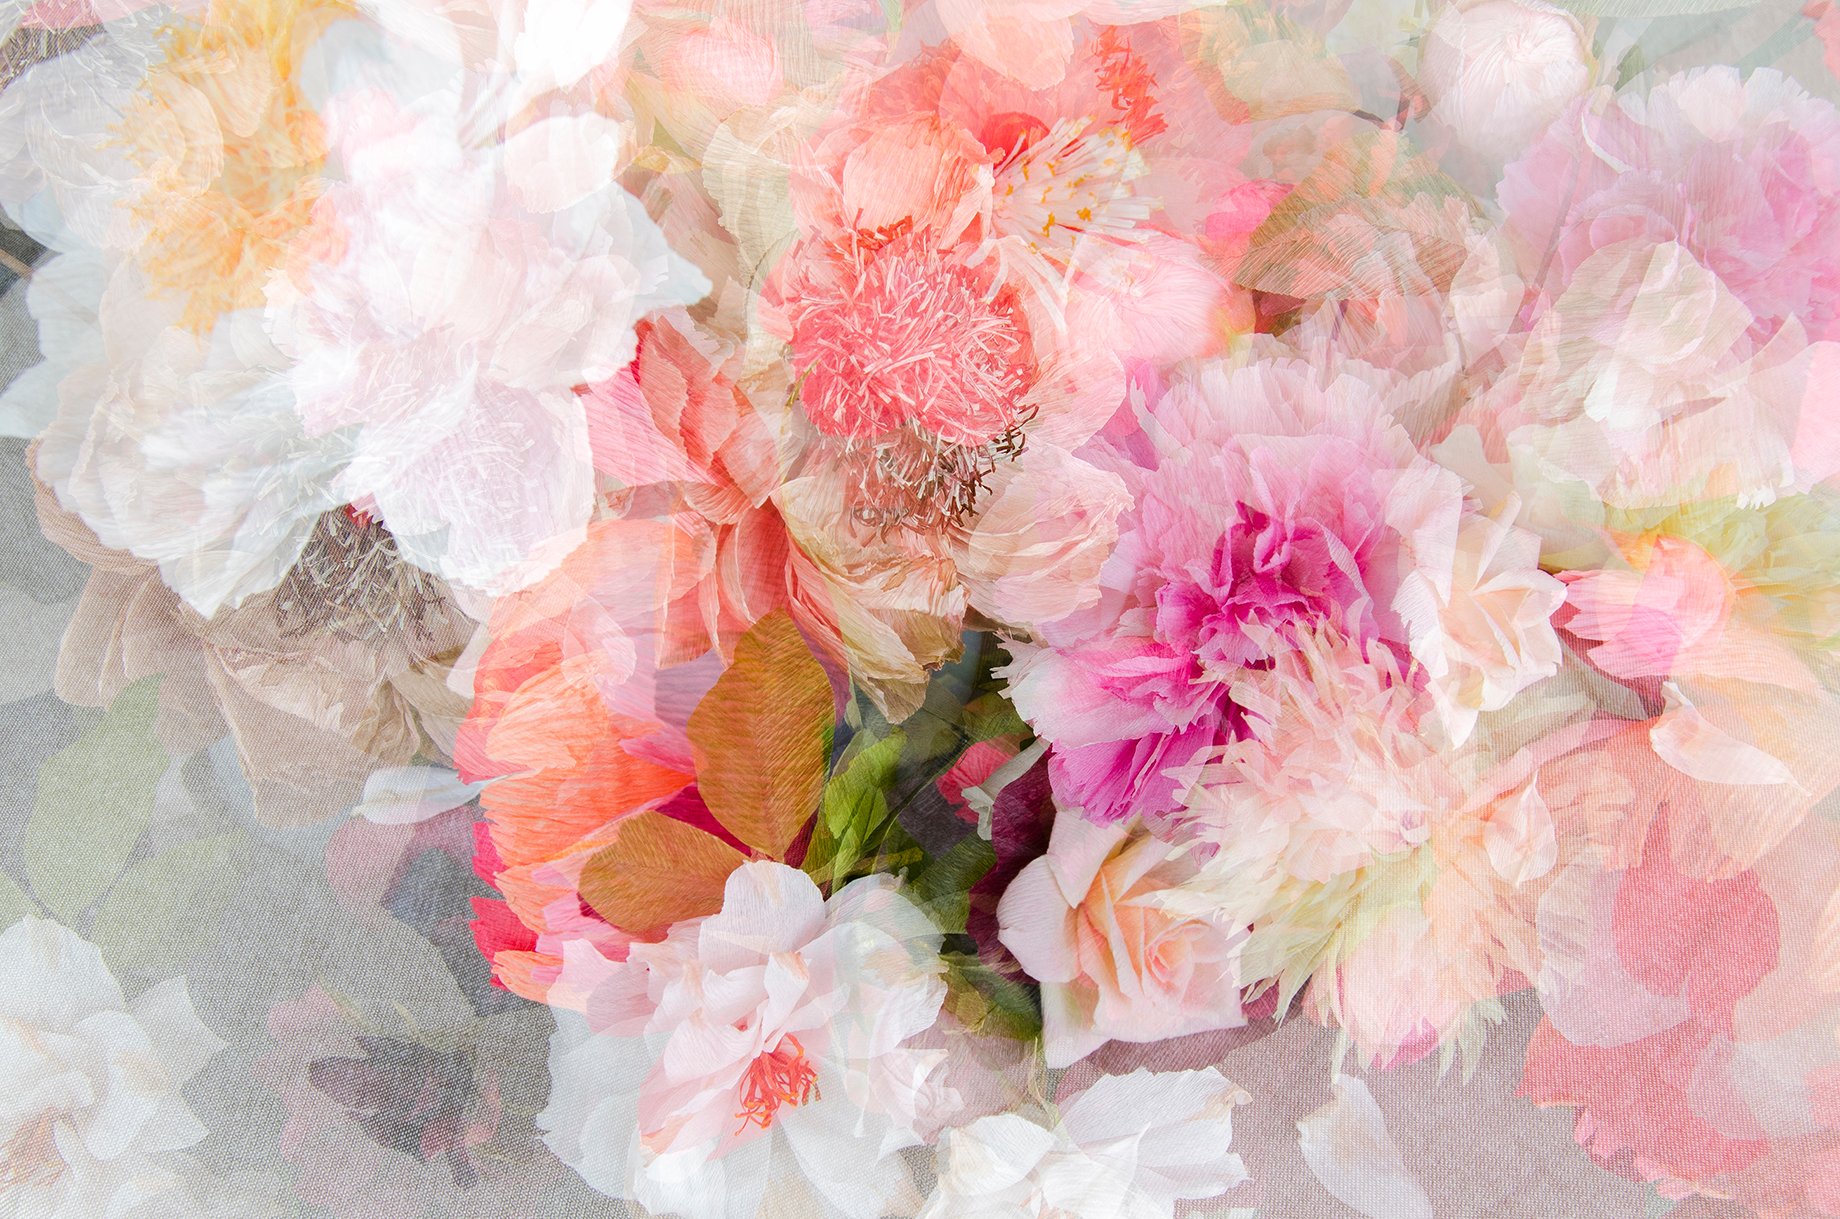 Irene Peña's series featuring paper flowers by Angela Hurtado Pimentel